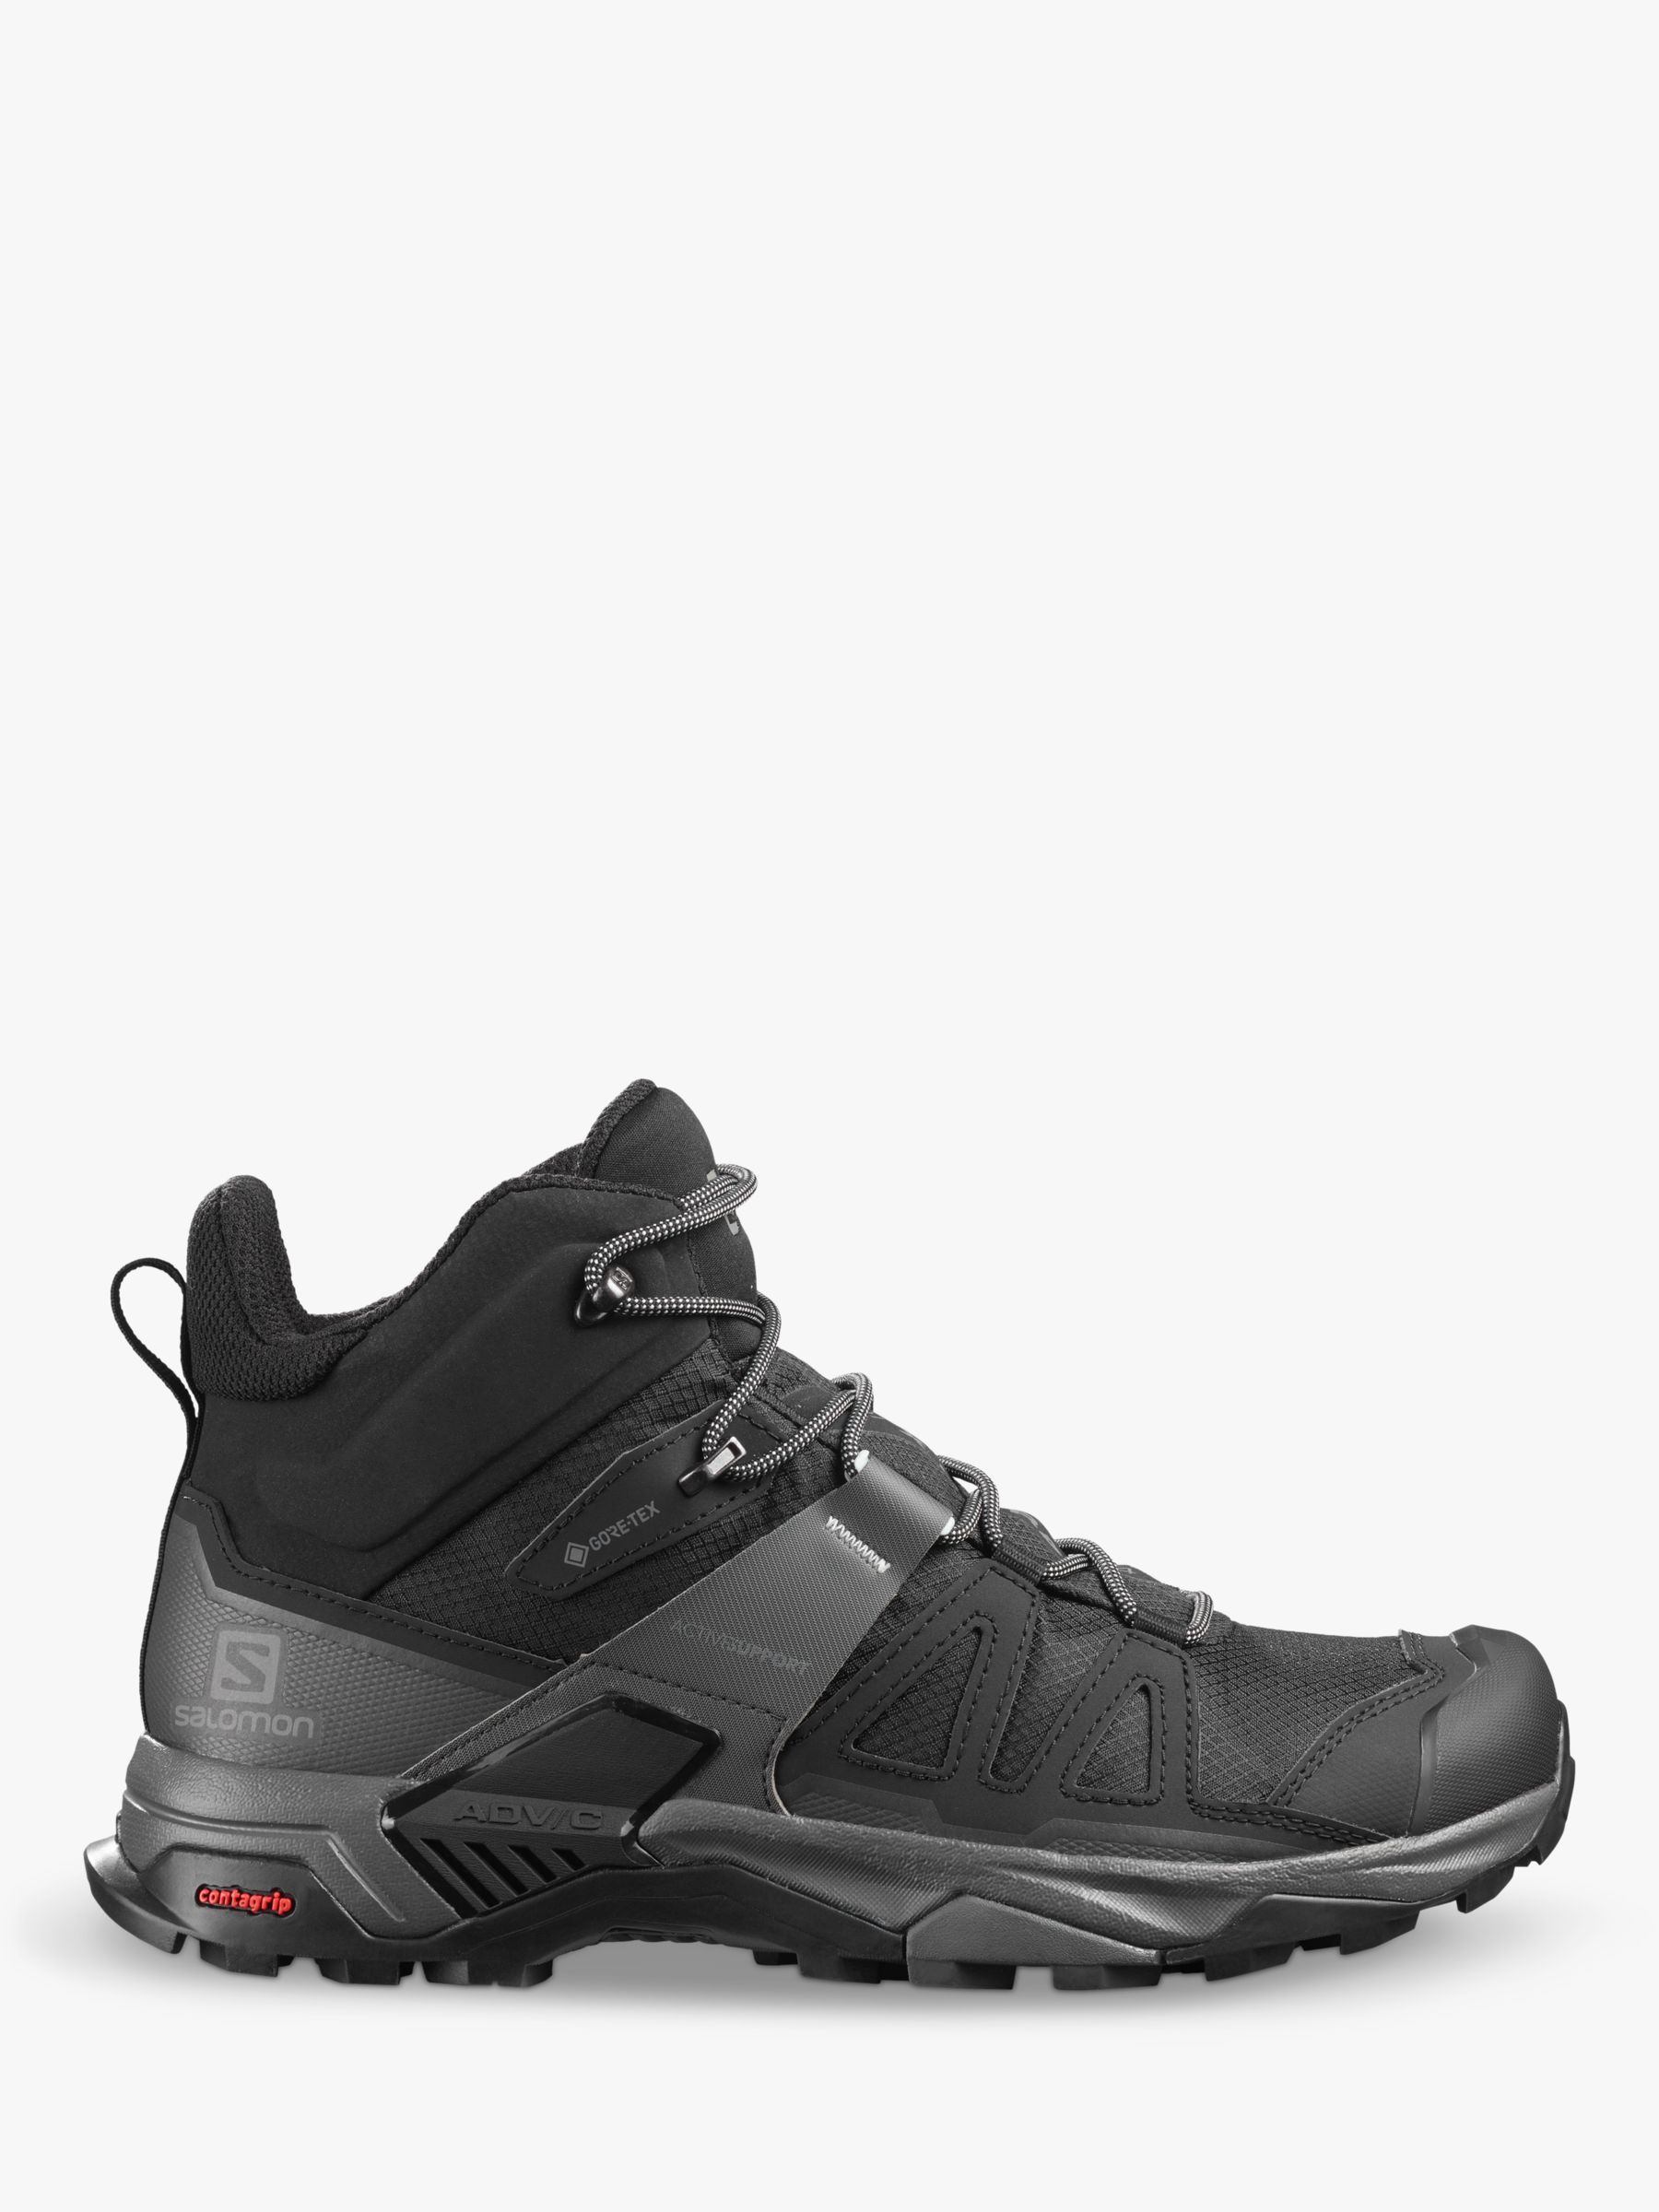 Salomon X Ultra 4 Mid Men's Waterproof Gore-Tex Hiking Boots at John Lewis & Partners